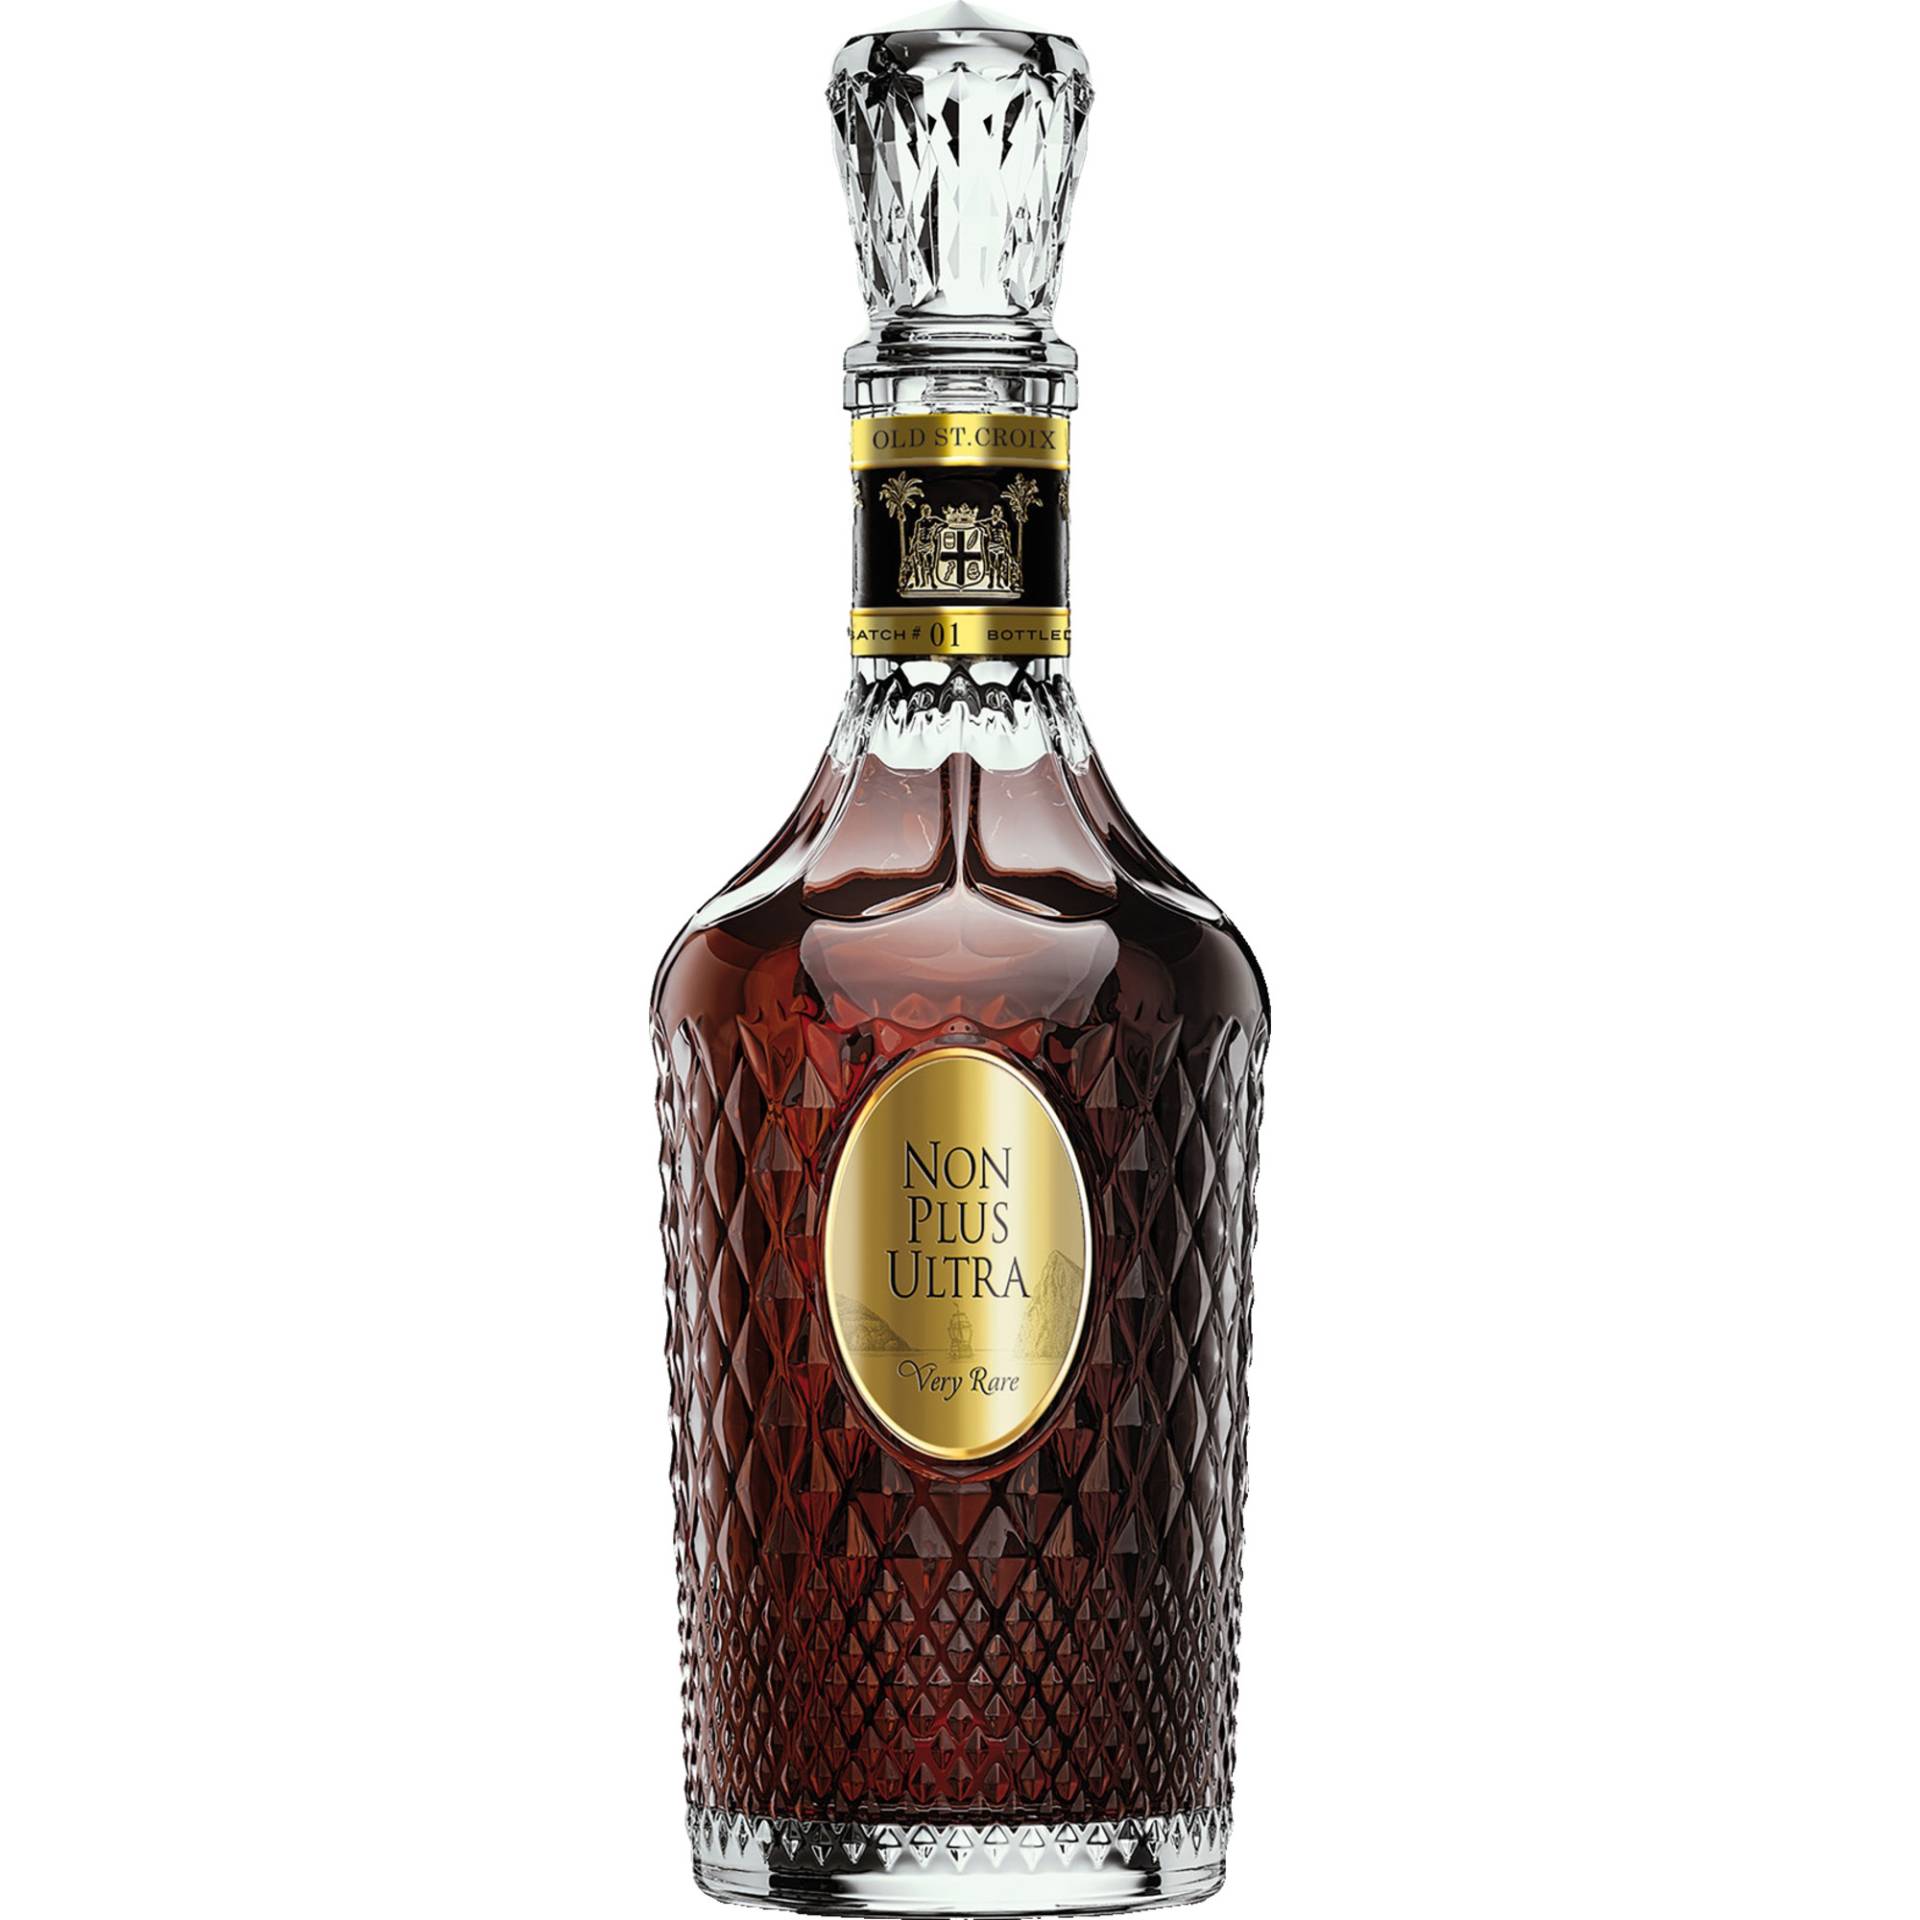 A.H. Riise Rum Non Plus Ultra Very Rare, 0,7 L, 42% Vol., in Etui, Spirituosen von Sierra Madre GmbH, Rohrstr. 26, 56093 Hagen, Germany